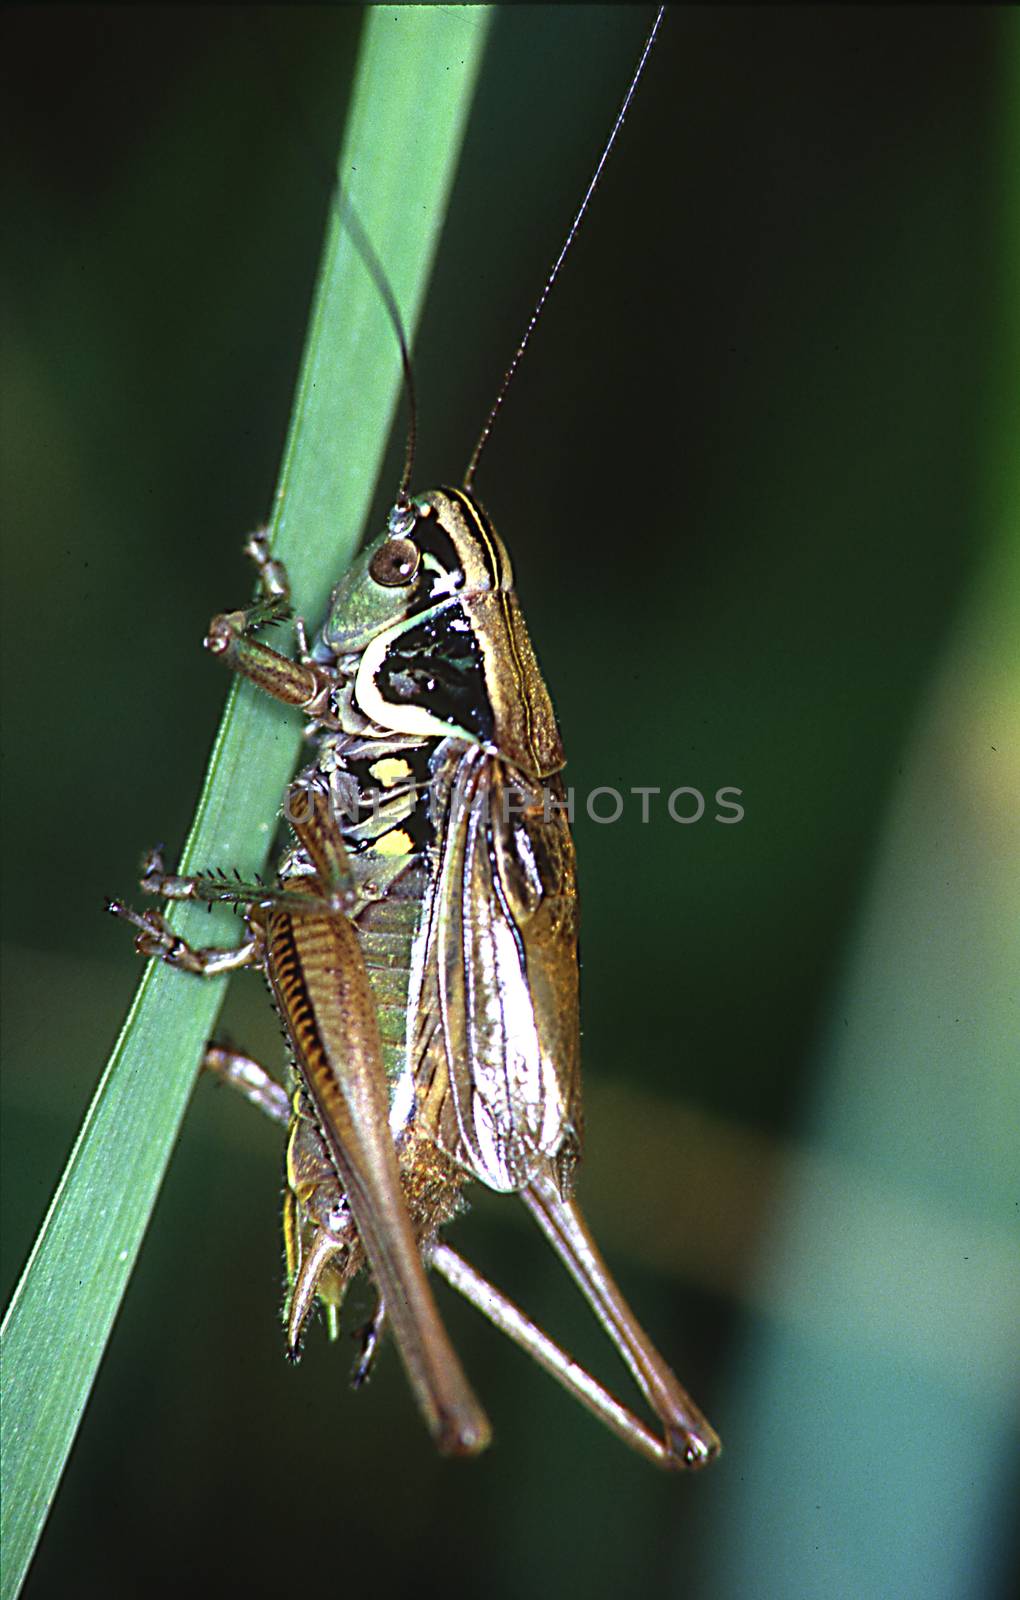 Rösel's grasshopper bite on grass